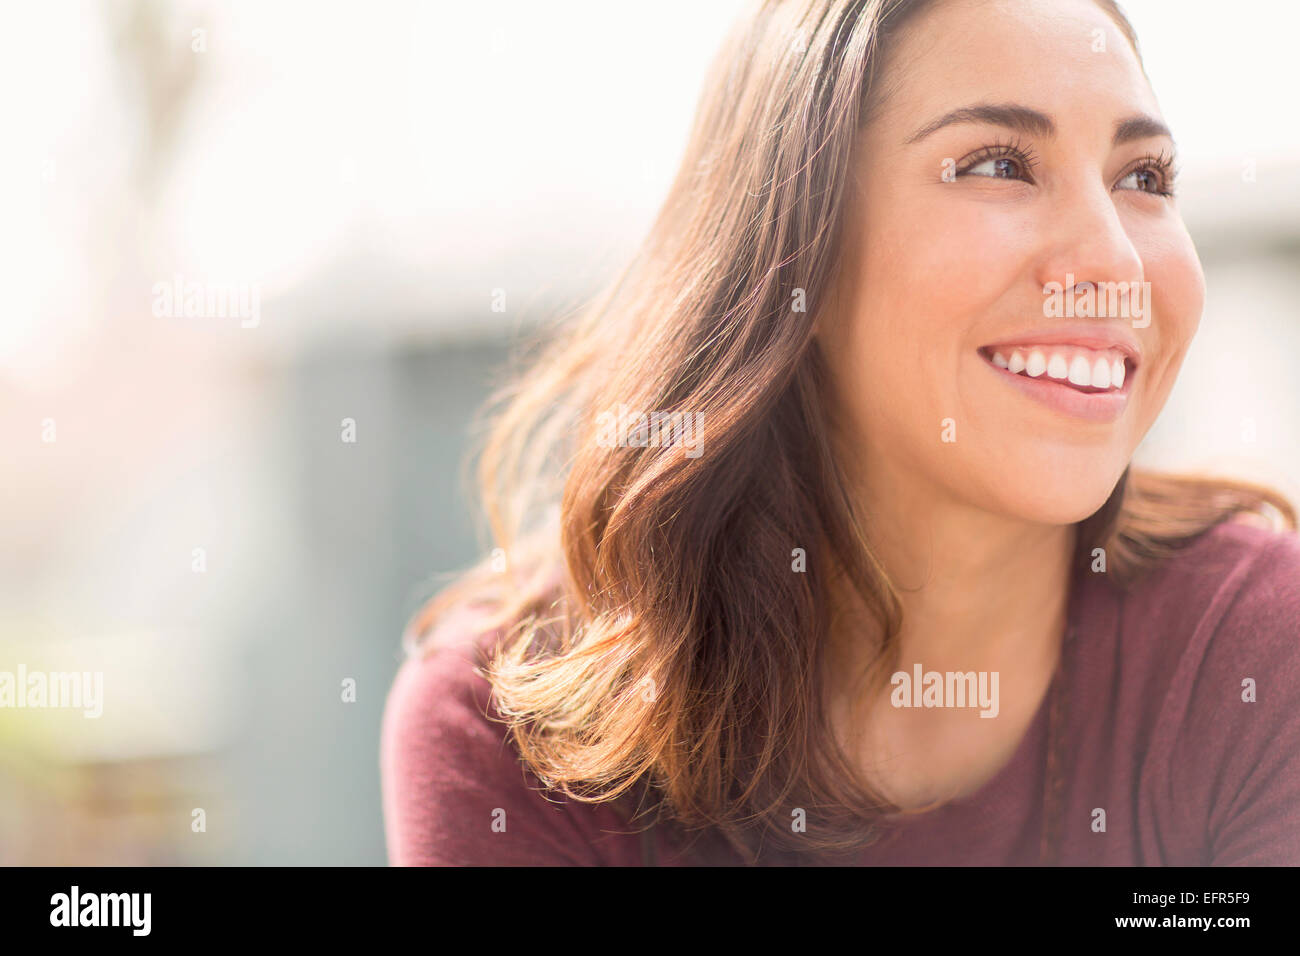 Woman smiling Stock Photo